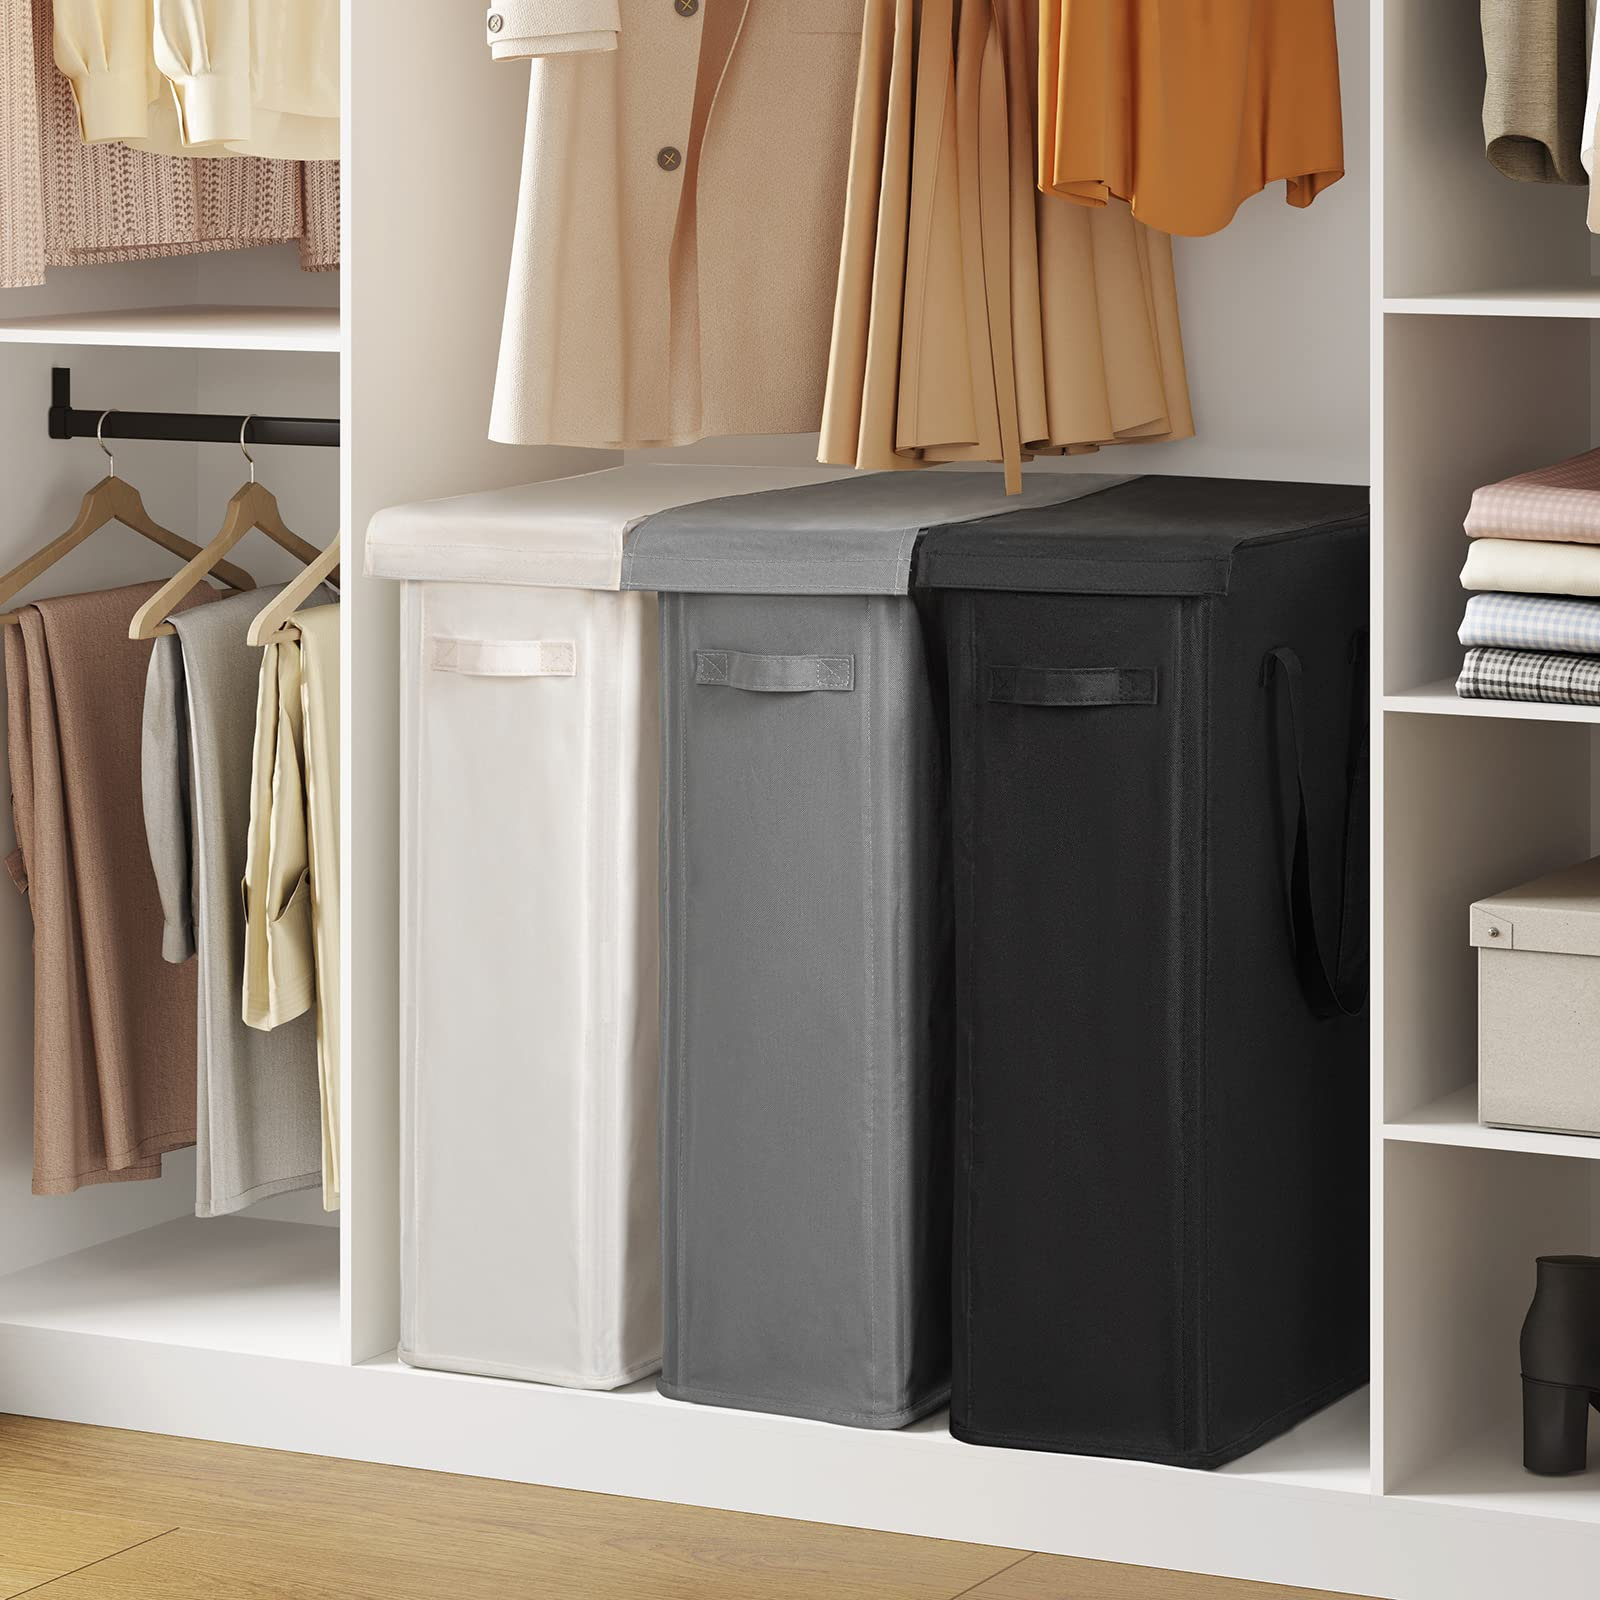 Latitude Run® Simplicity Laundry Room Organizer & Reviews